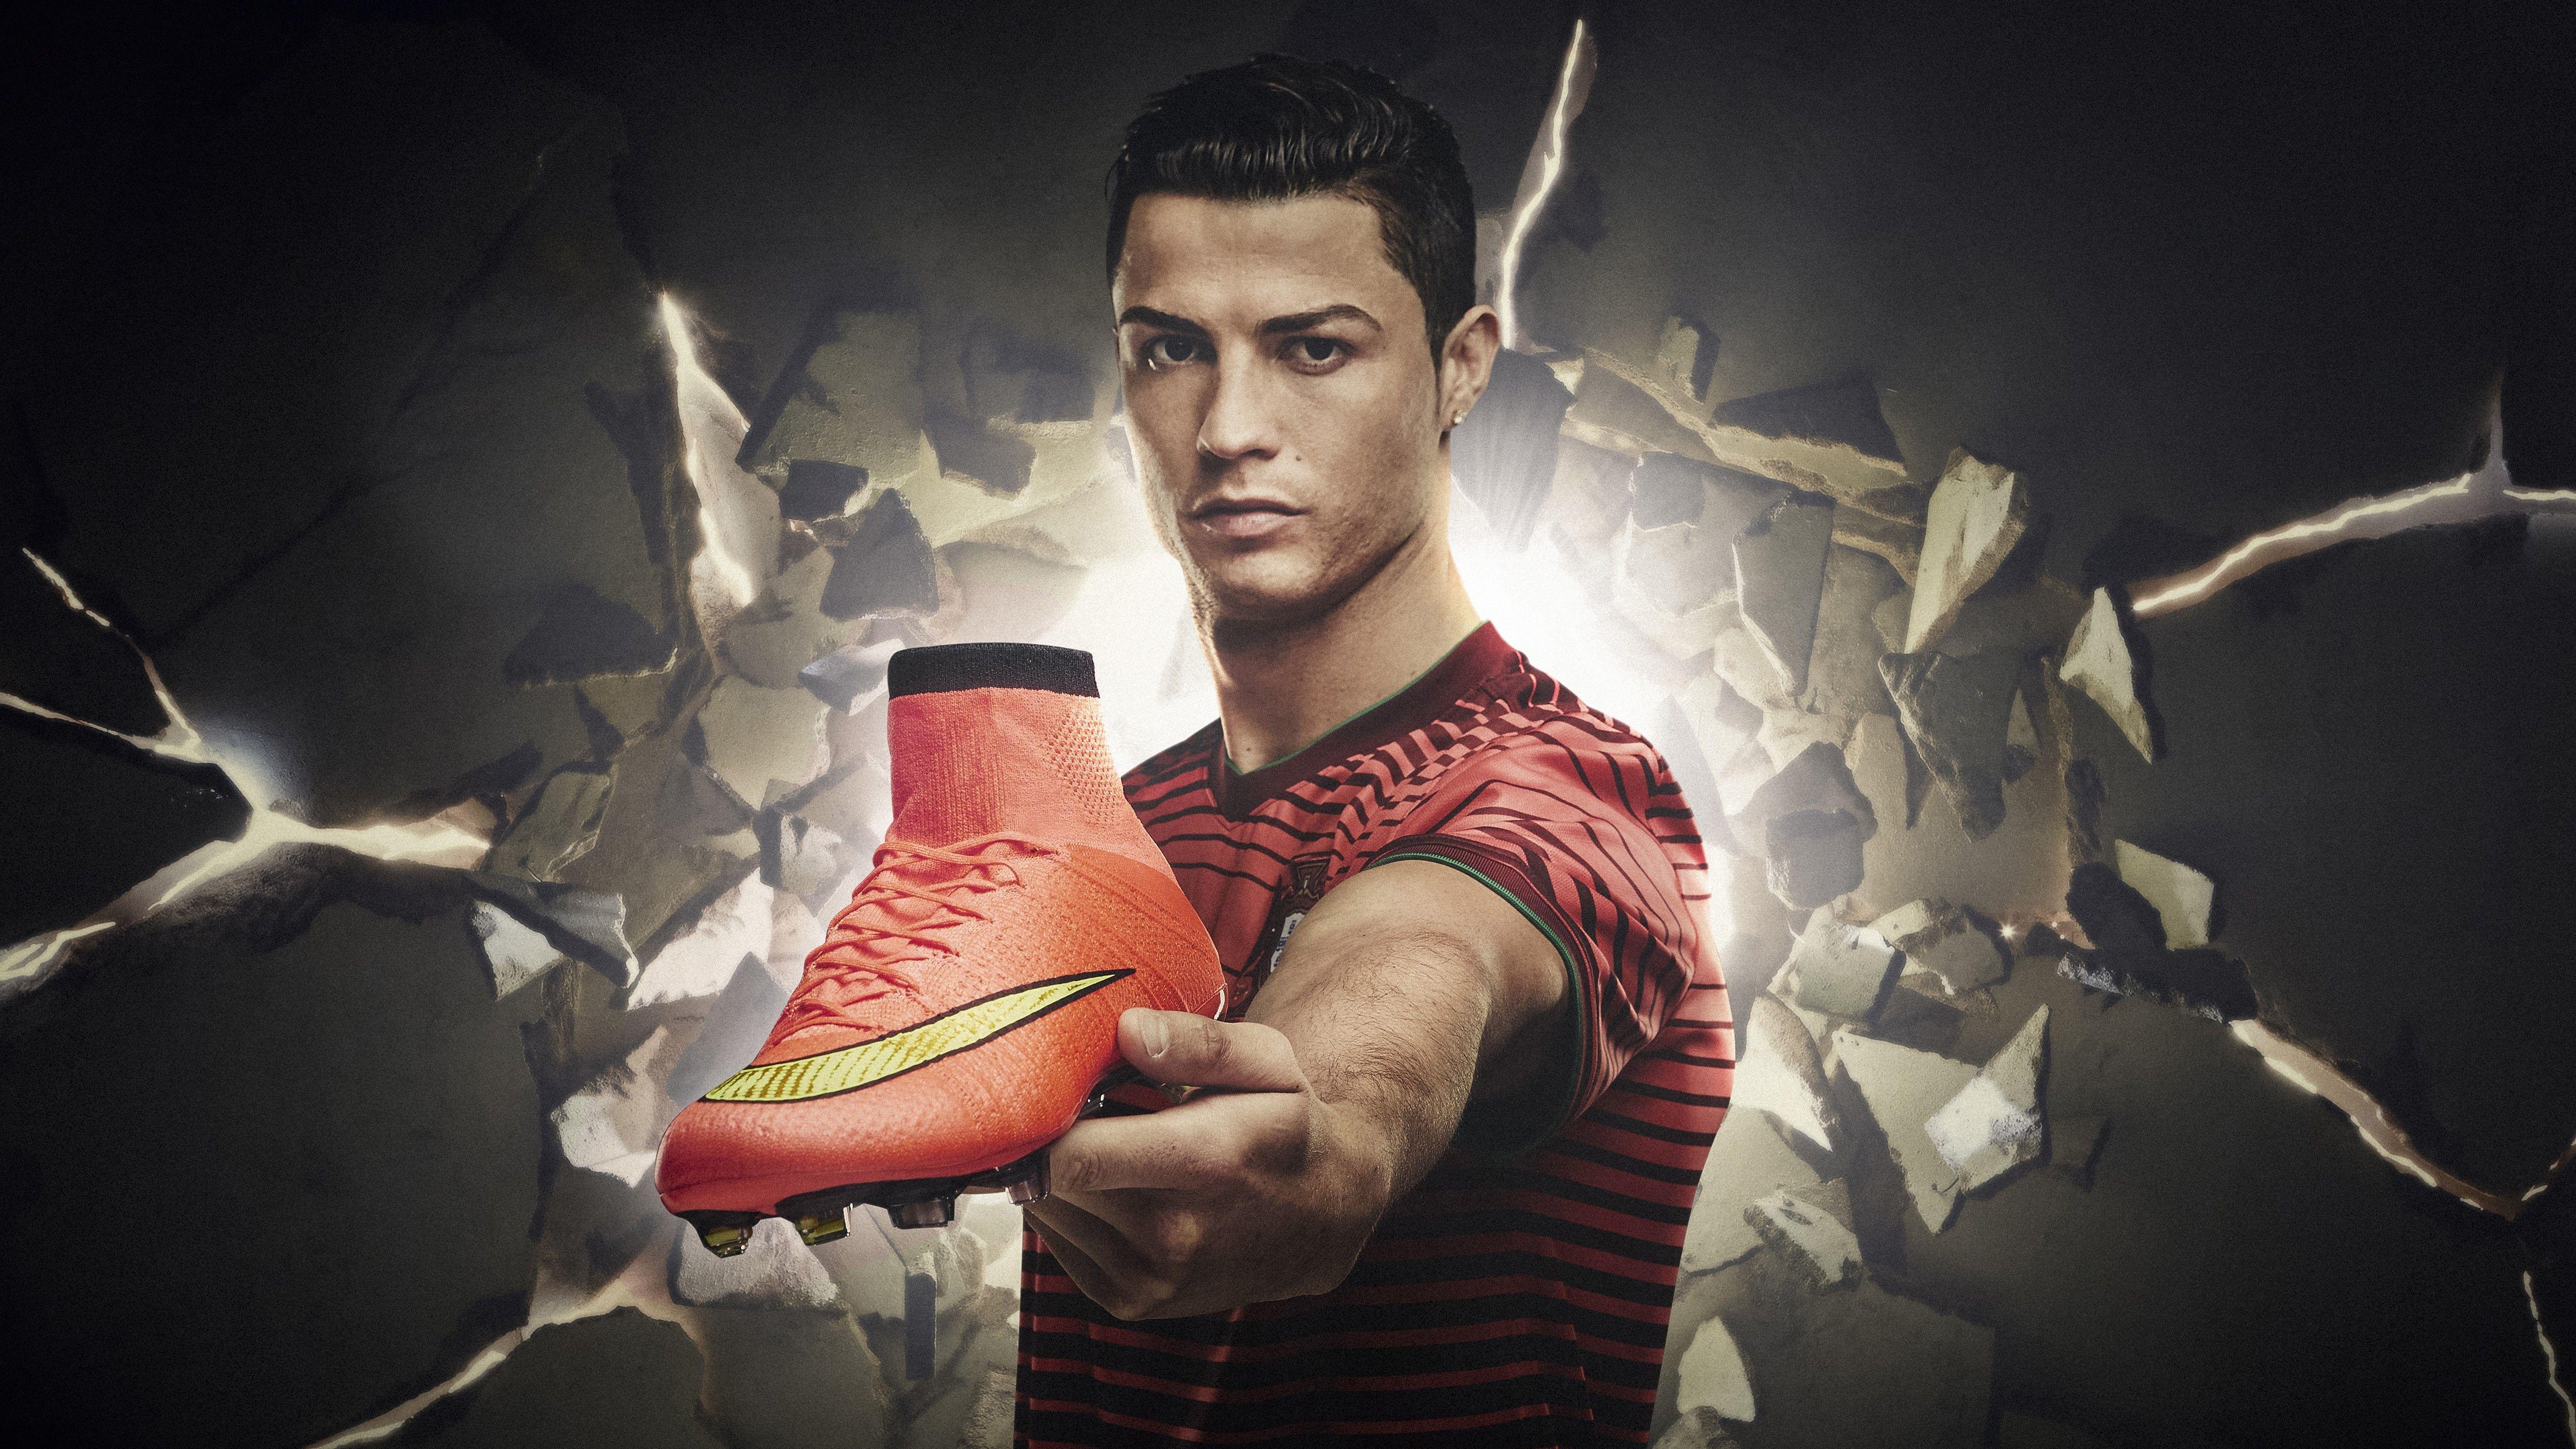 Cristiano Ronaldo soccer shoes Nike touts wallpaper and image